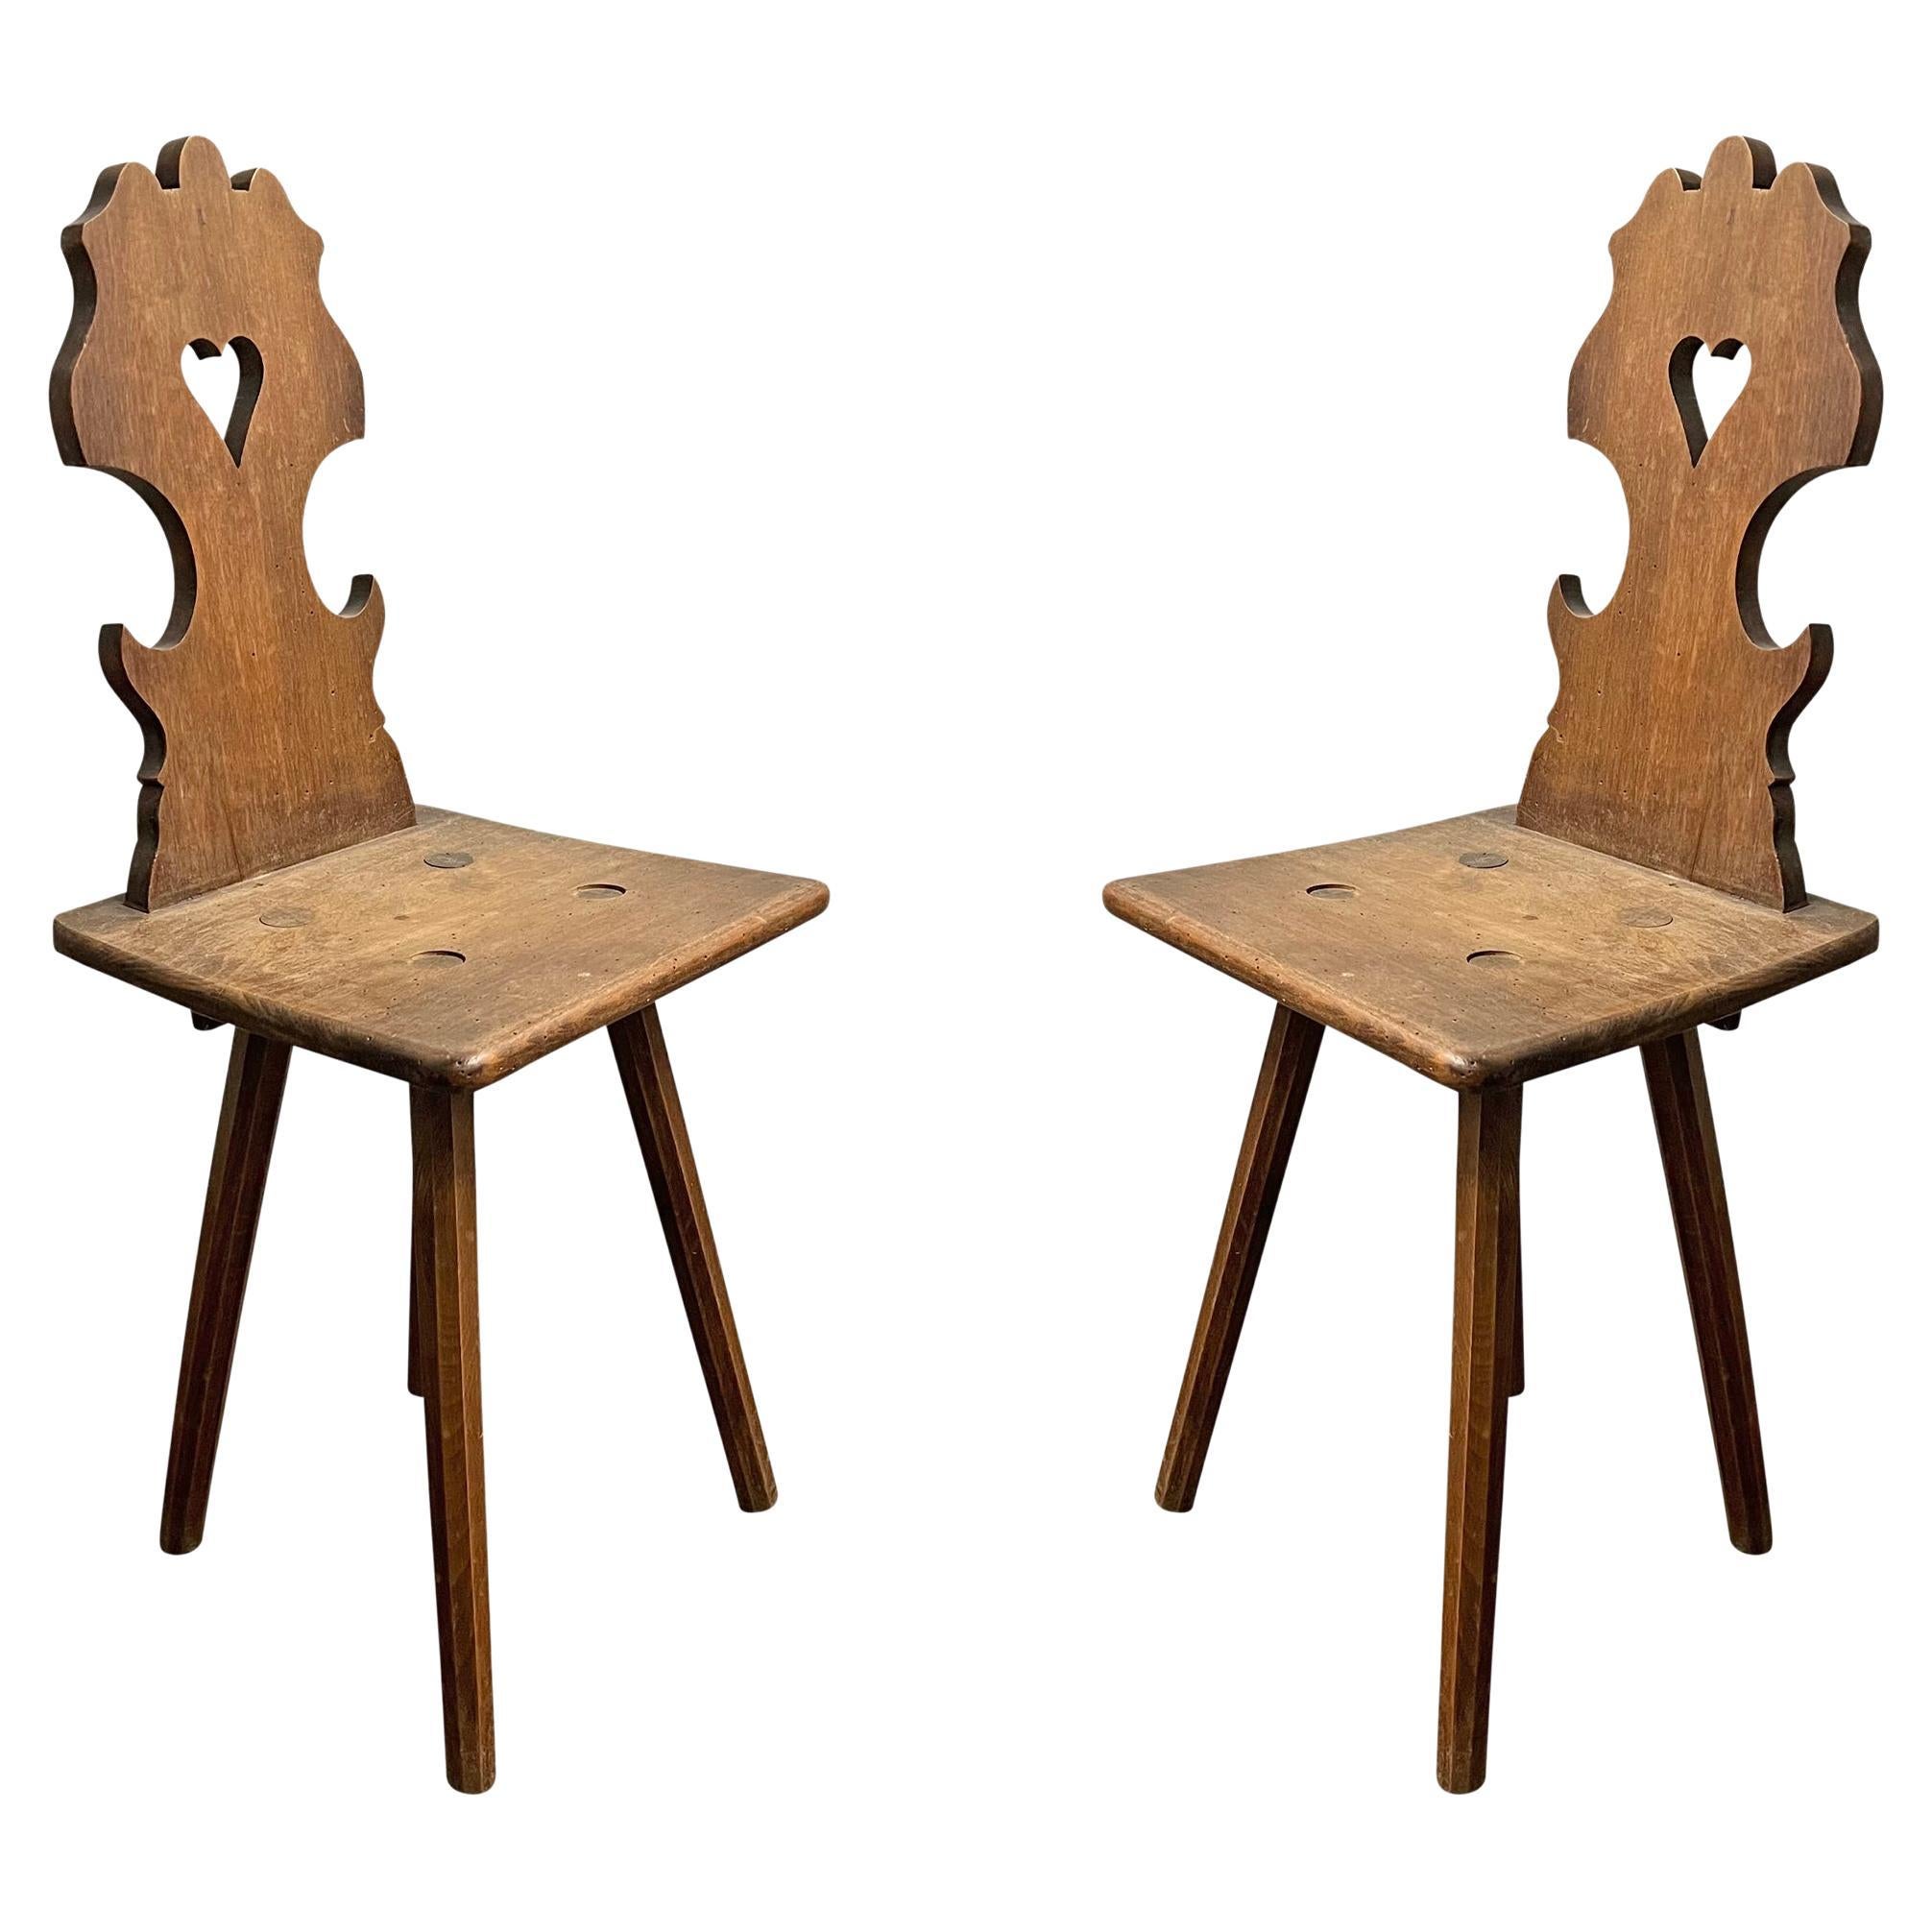 Pair of 19th Century Italian Tyrolean Chairs